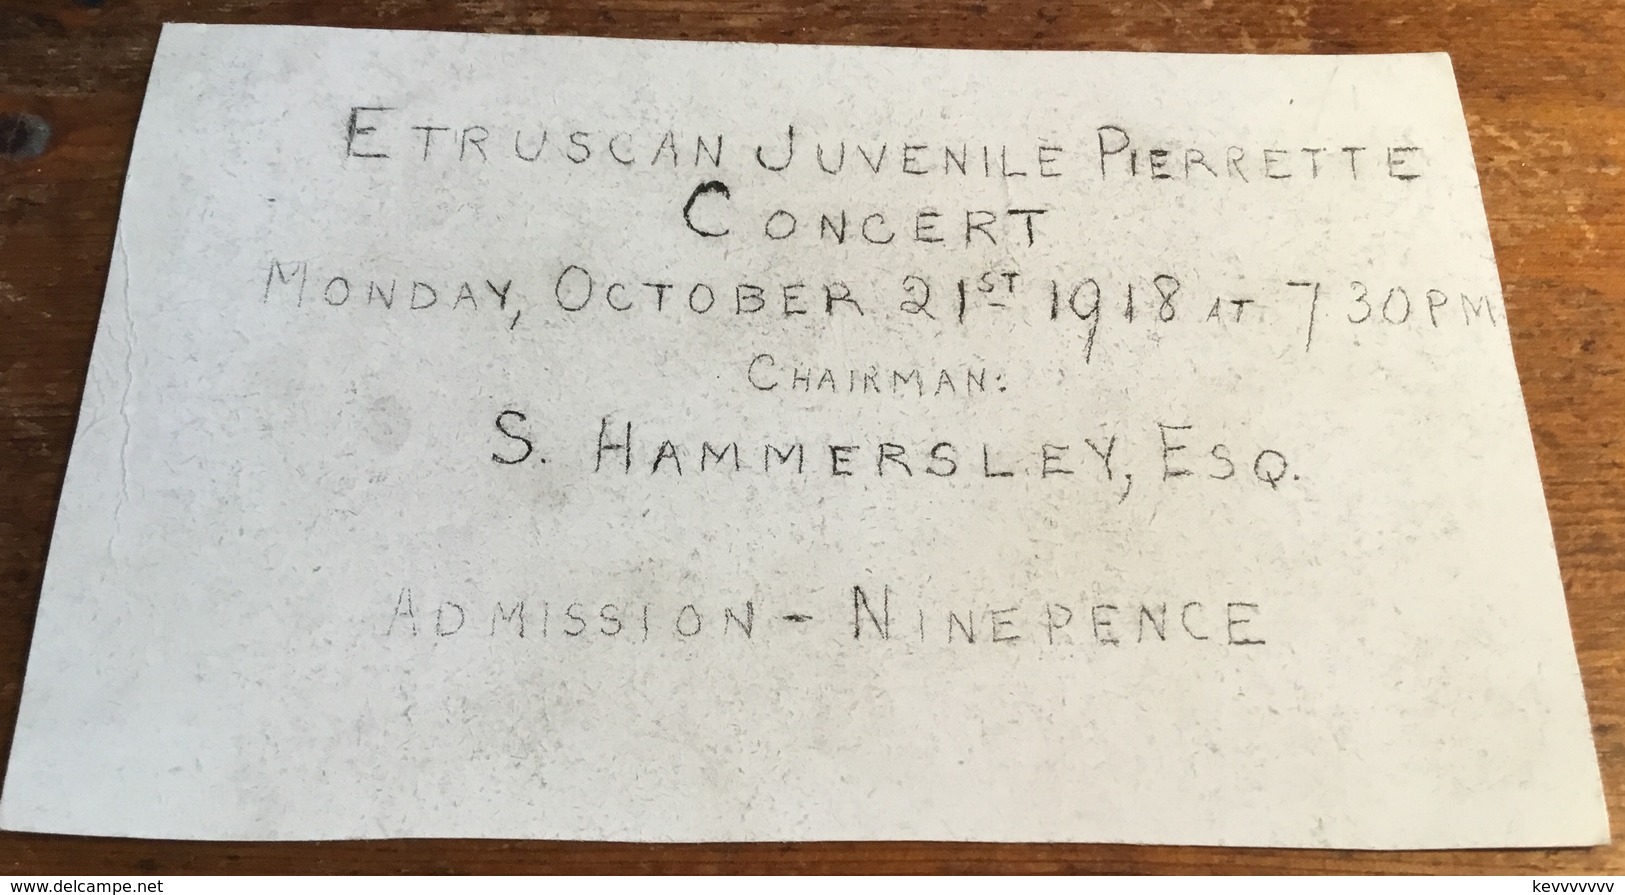 Etruscan Juvenile Pierrette Concert, Monday, October 21st 1918 At 7.30pm.  Chaiman S. Hammersley, Esq.  Admission - 9d - Entertainers